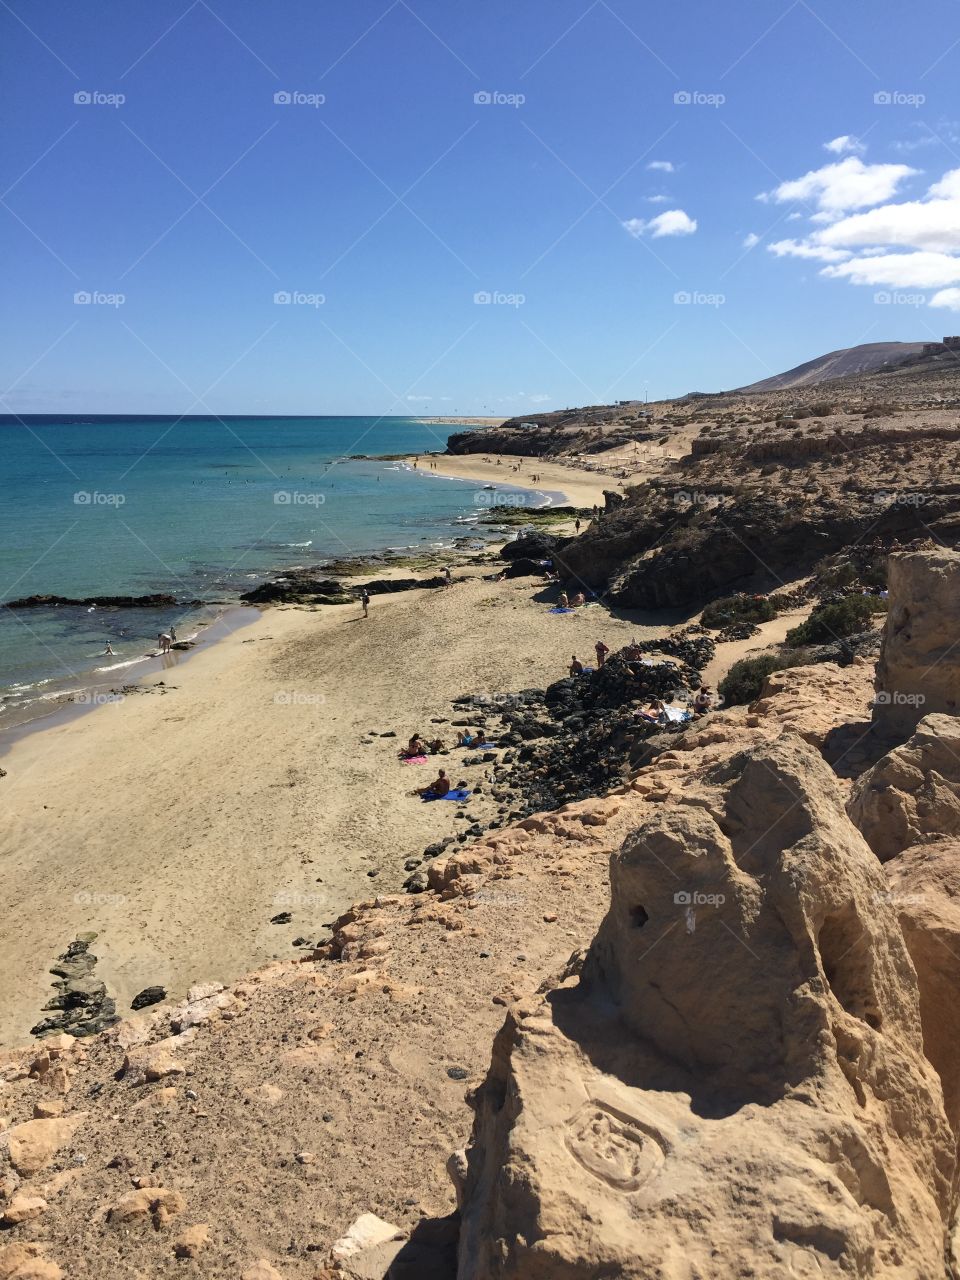 Beach
Fuerteventura
